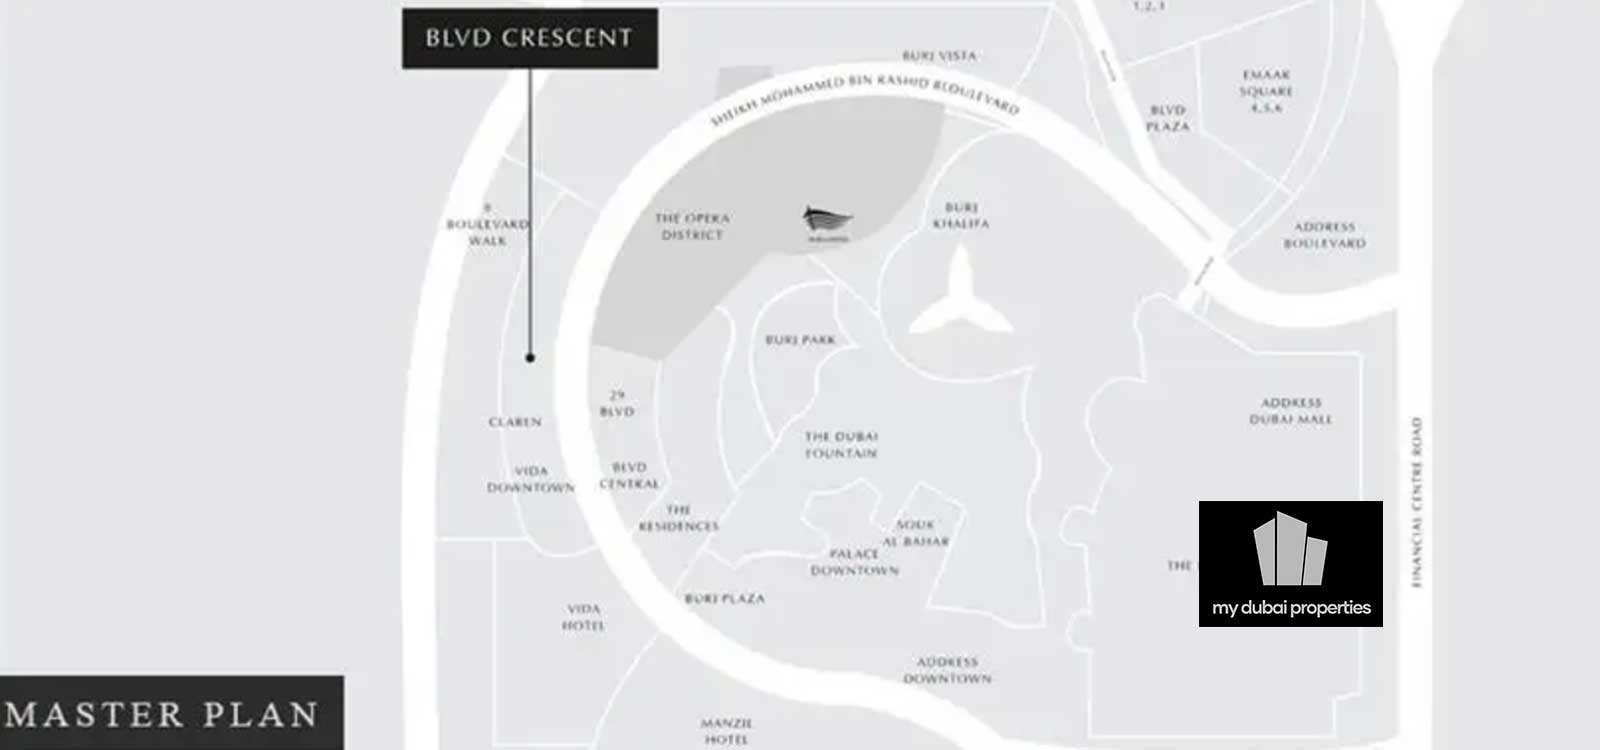 BLVD Crescent Master Plan